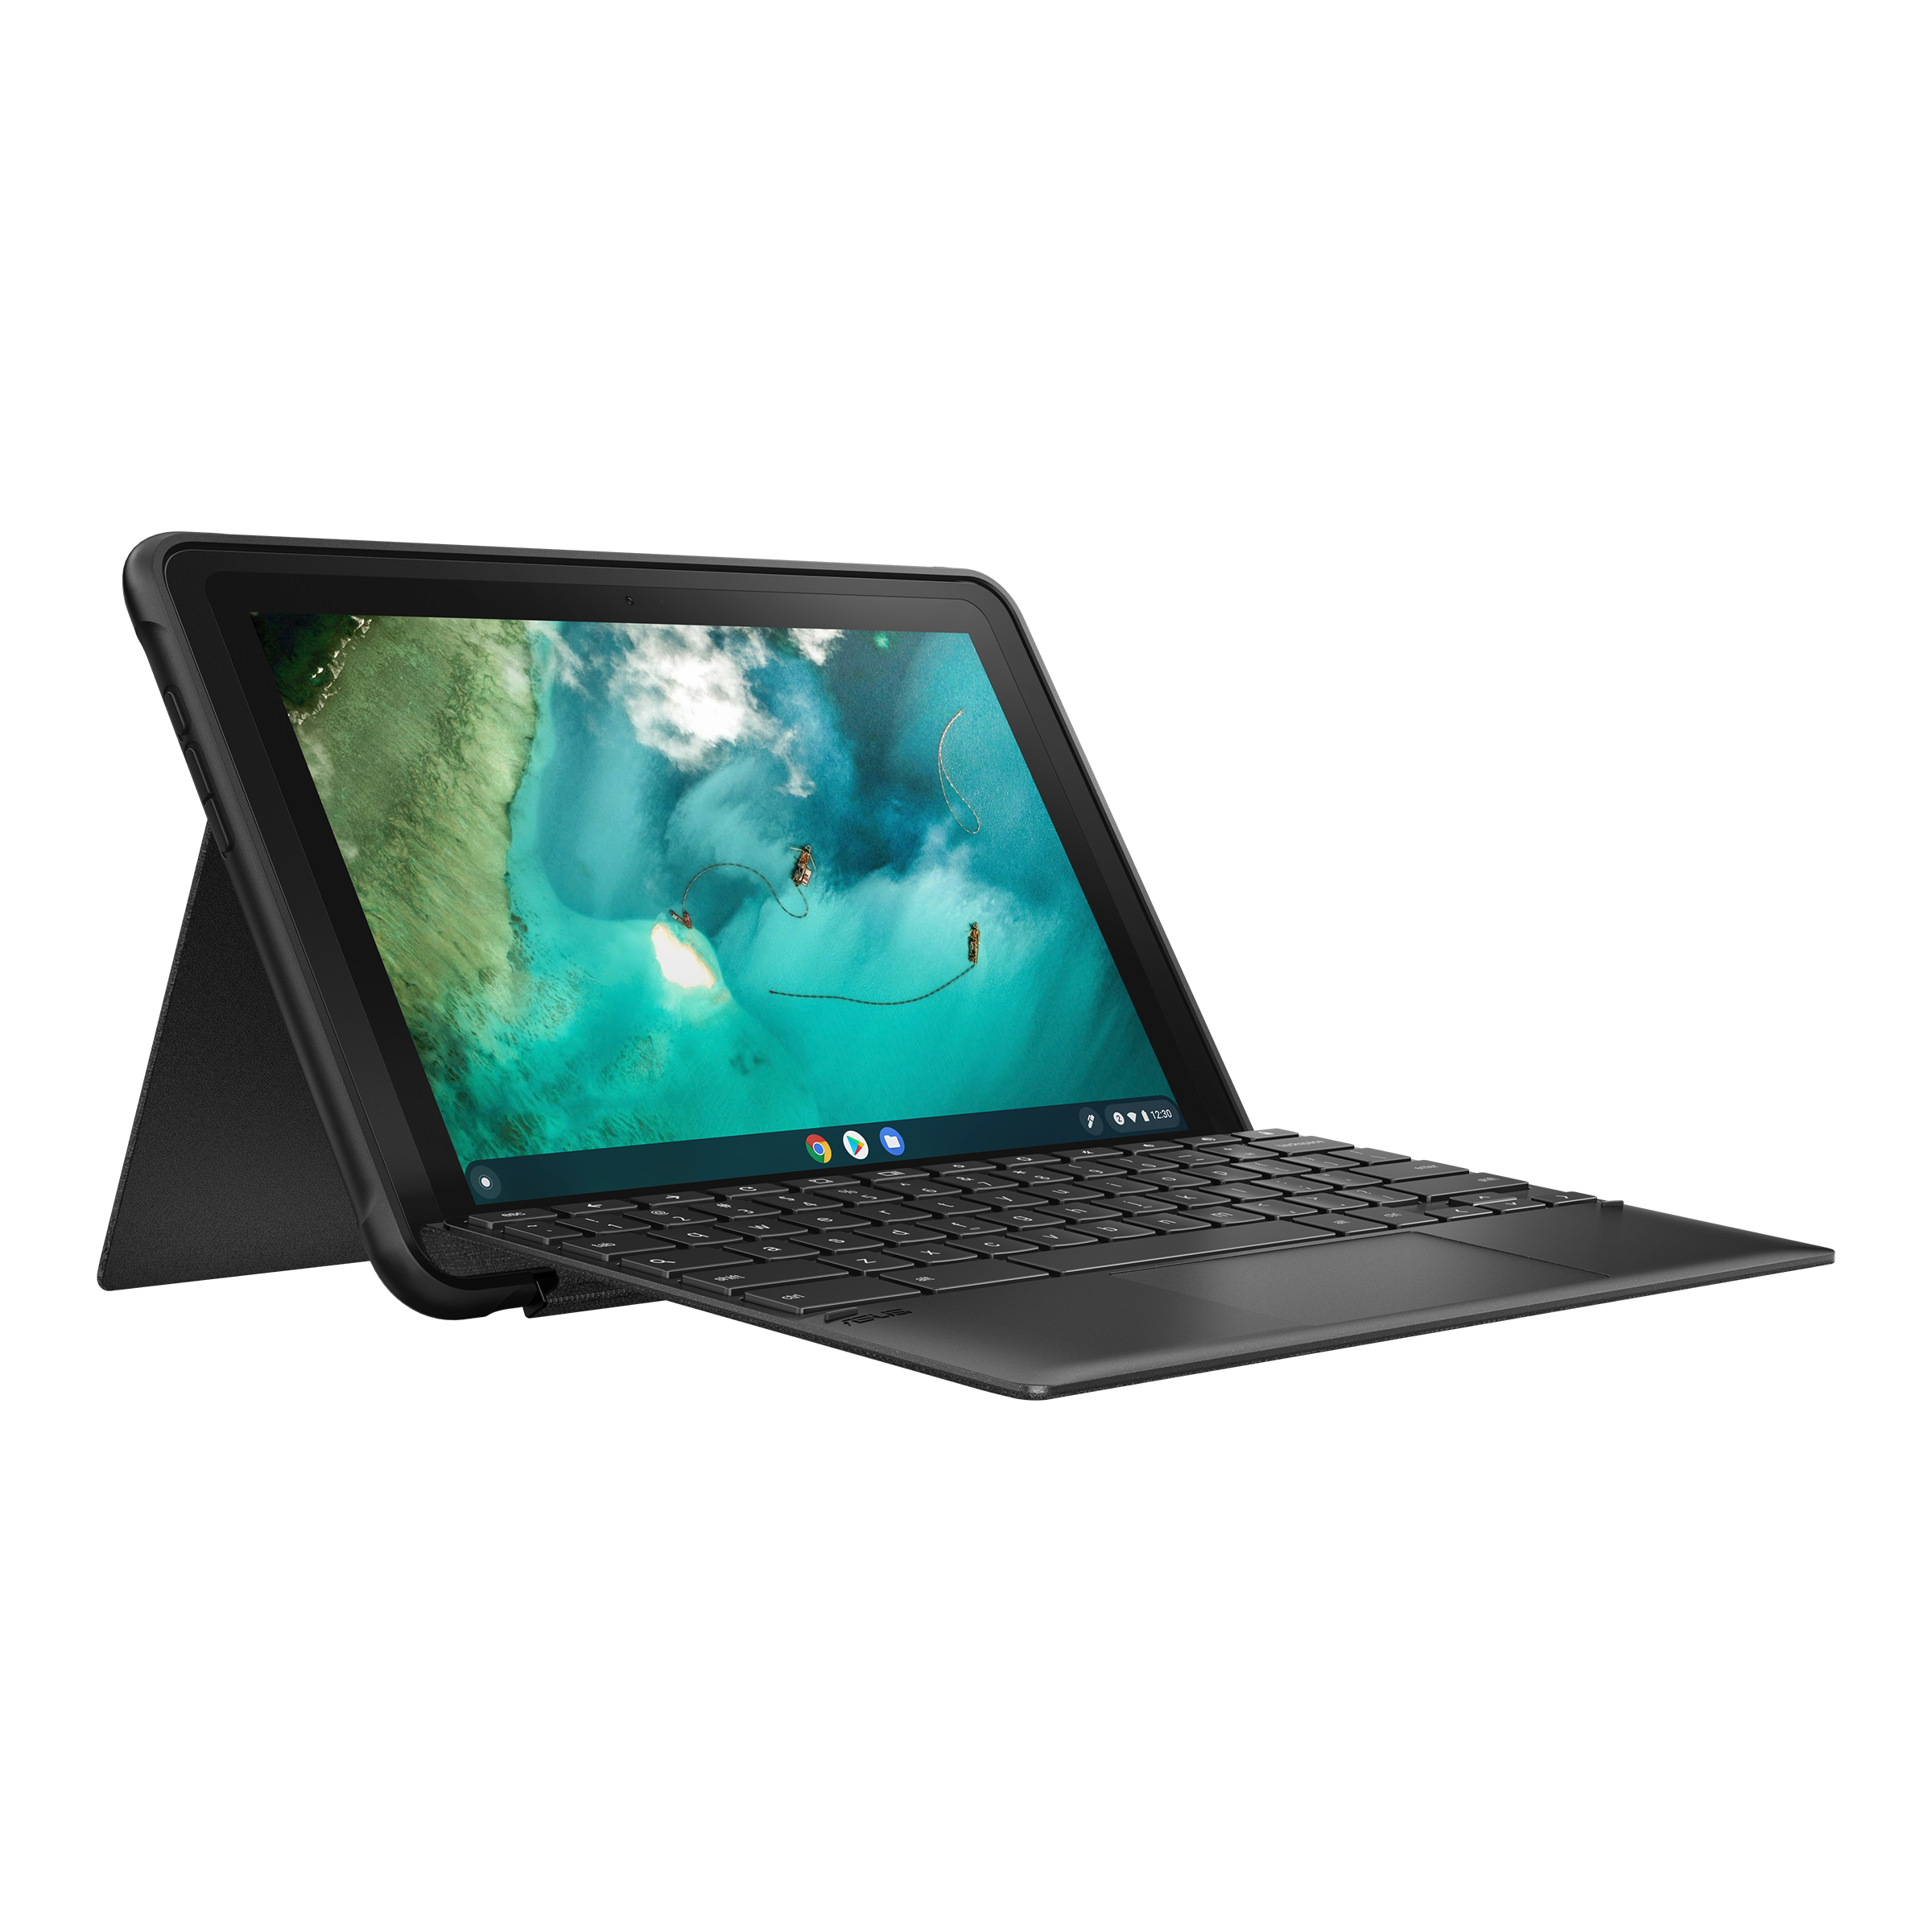 ASUS Chromebook Detachable CZ1 (CZ1000) | Chromebook | ノート